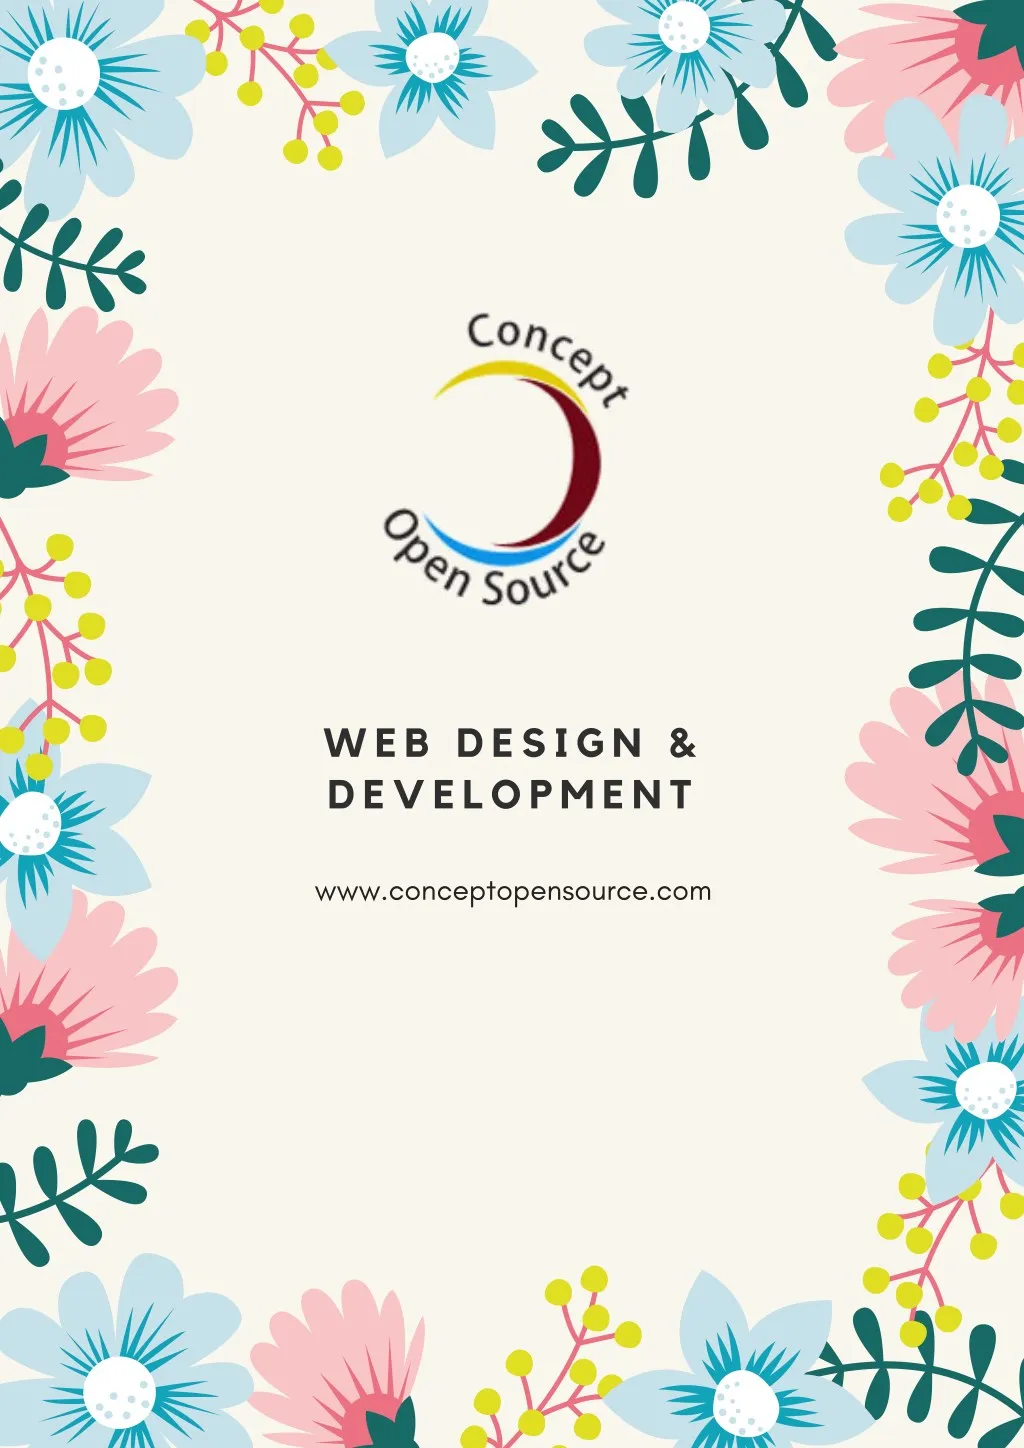 web design devel opmen t